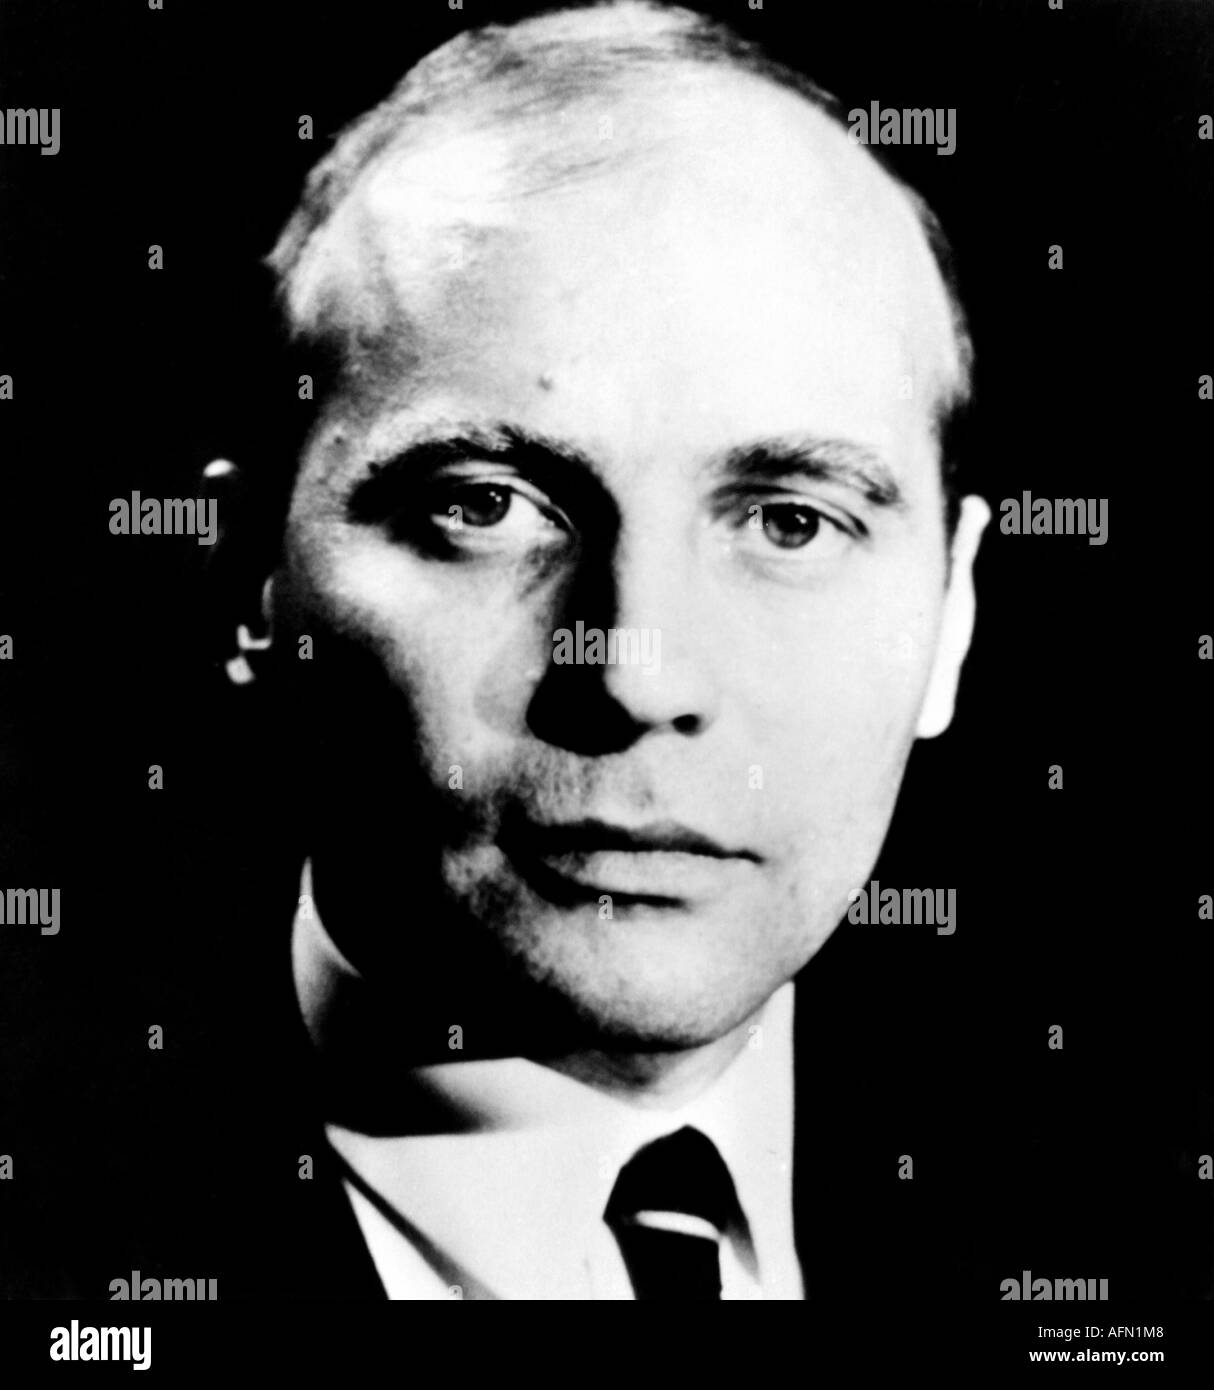 Henze, Hans Werner, 1.7.1926 - 27.10.2012, German composer, portrait, 1950s, Stock Photo